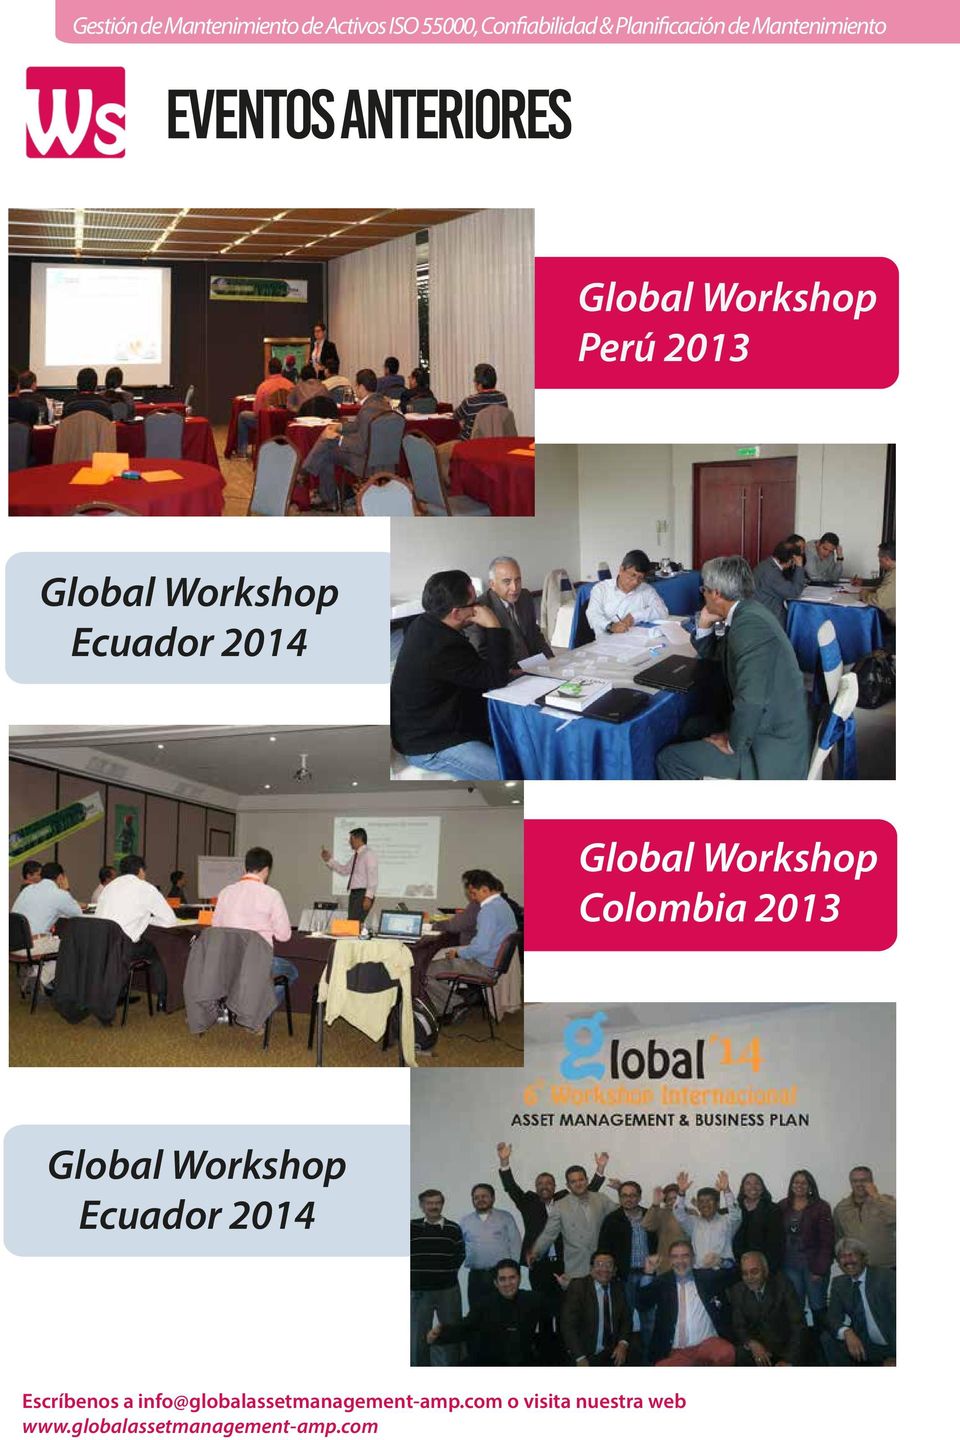 Workshop Ecuador 2014 Global